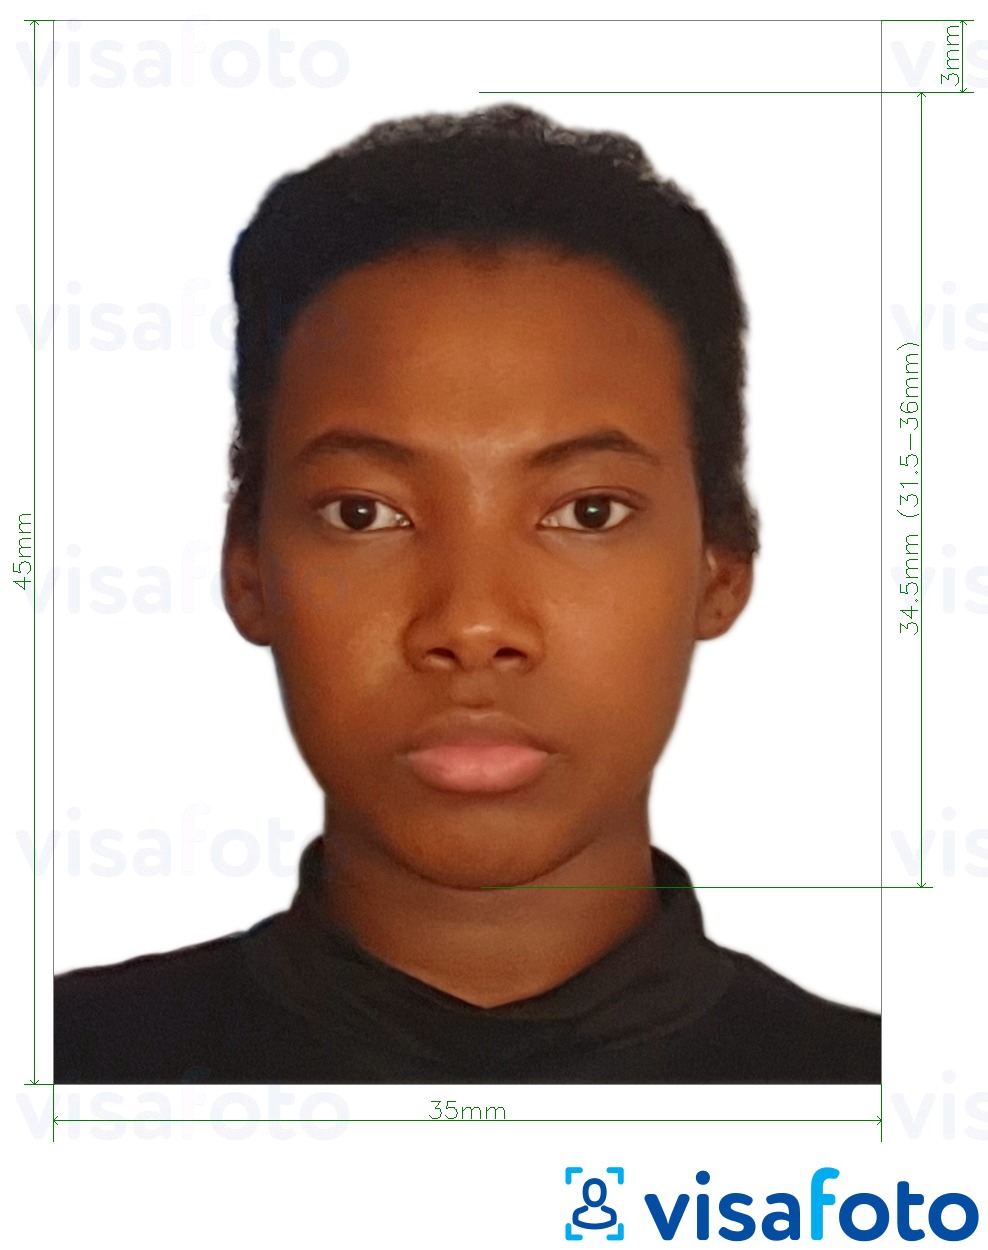 Contoh foto untuk Pasport Cameroon 35x45 mm (3.5x4.5 cm) dengan spesifikasi saiz yang tepat.